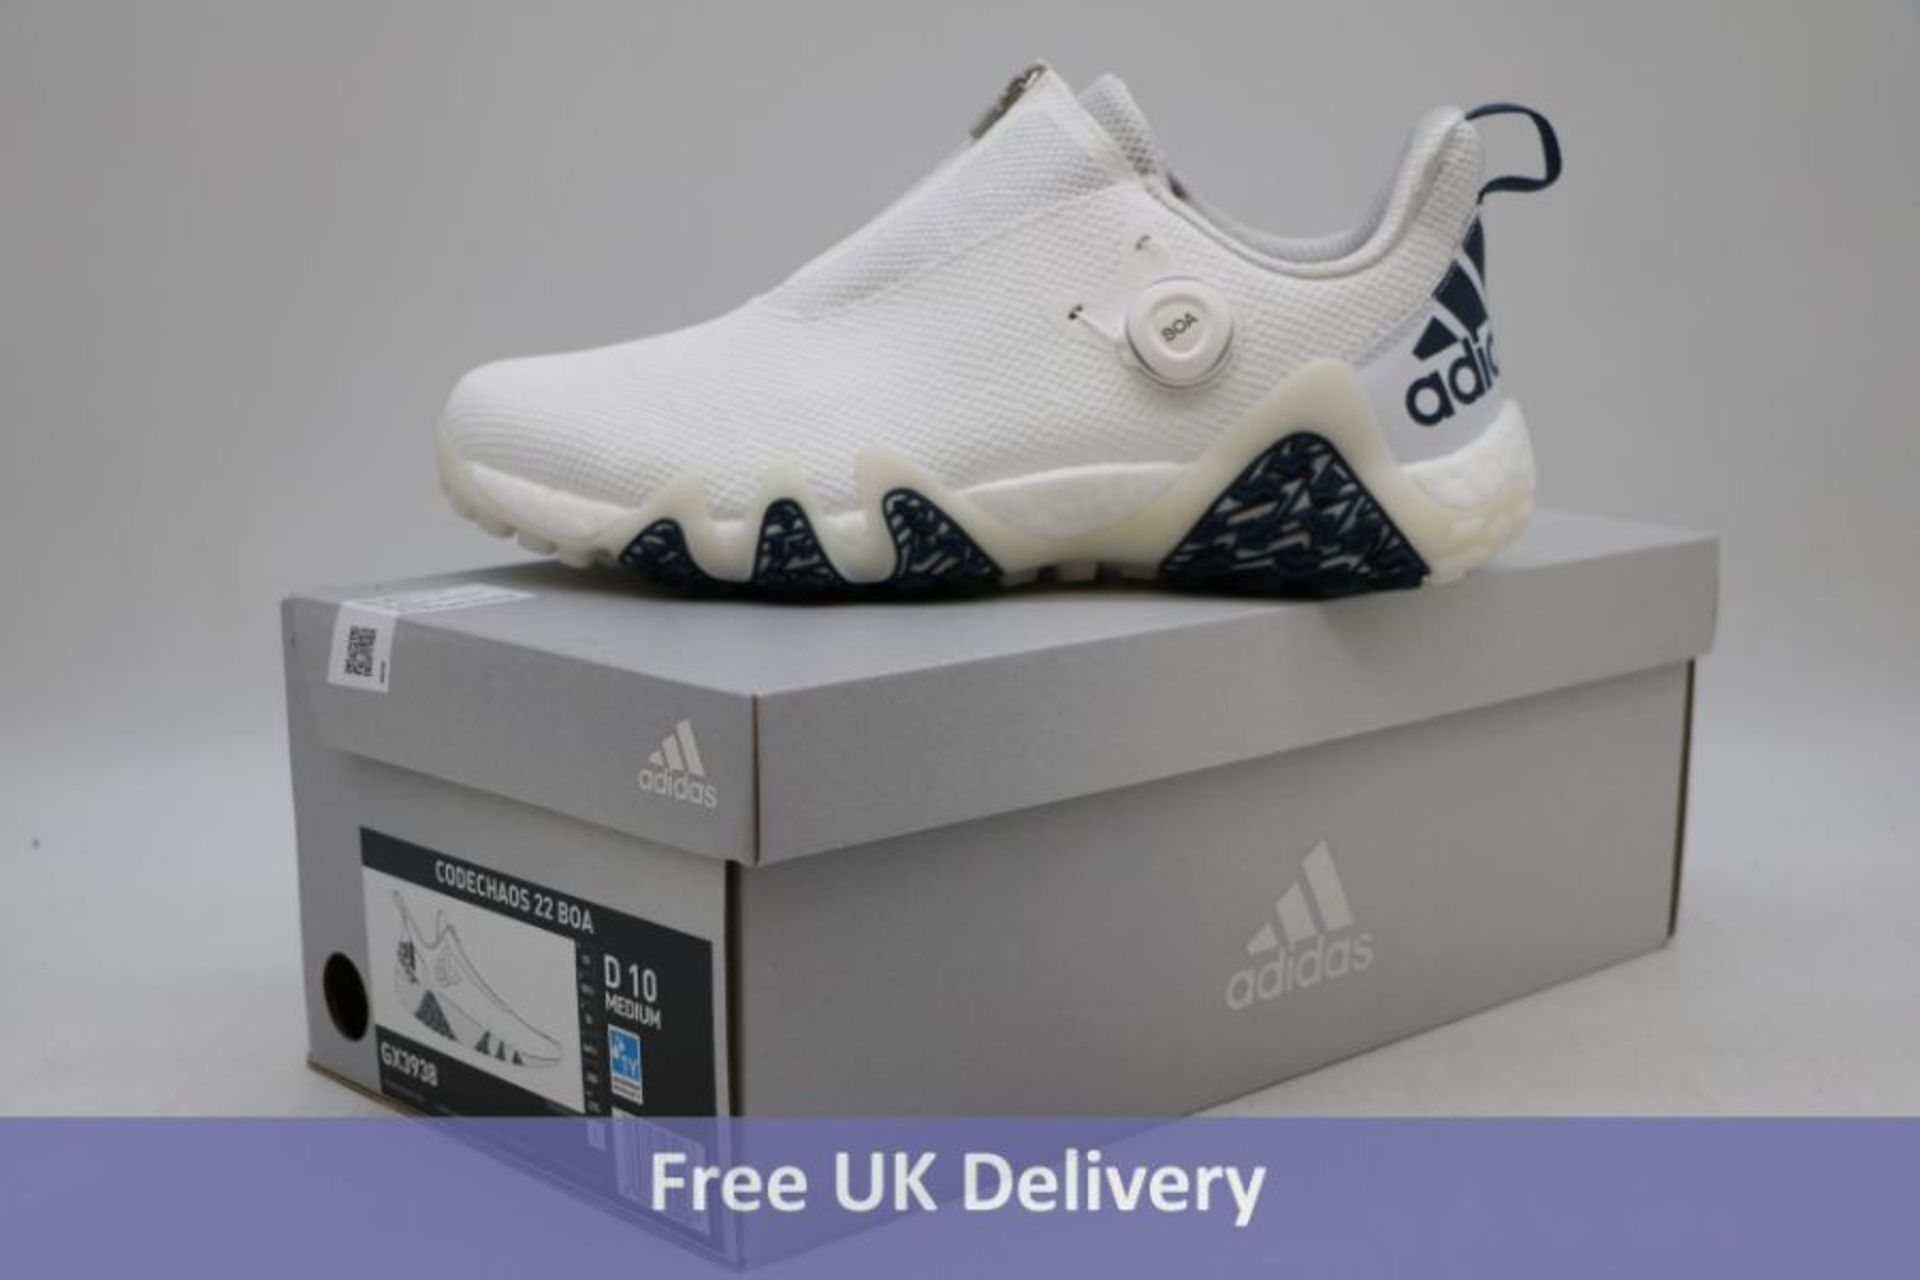 Adidas Code Chaos BOA Golf Shoes GX3938 D10 Medium, White/Blue, UK 10